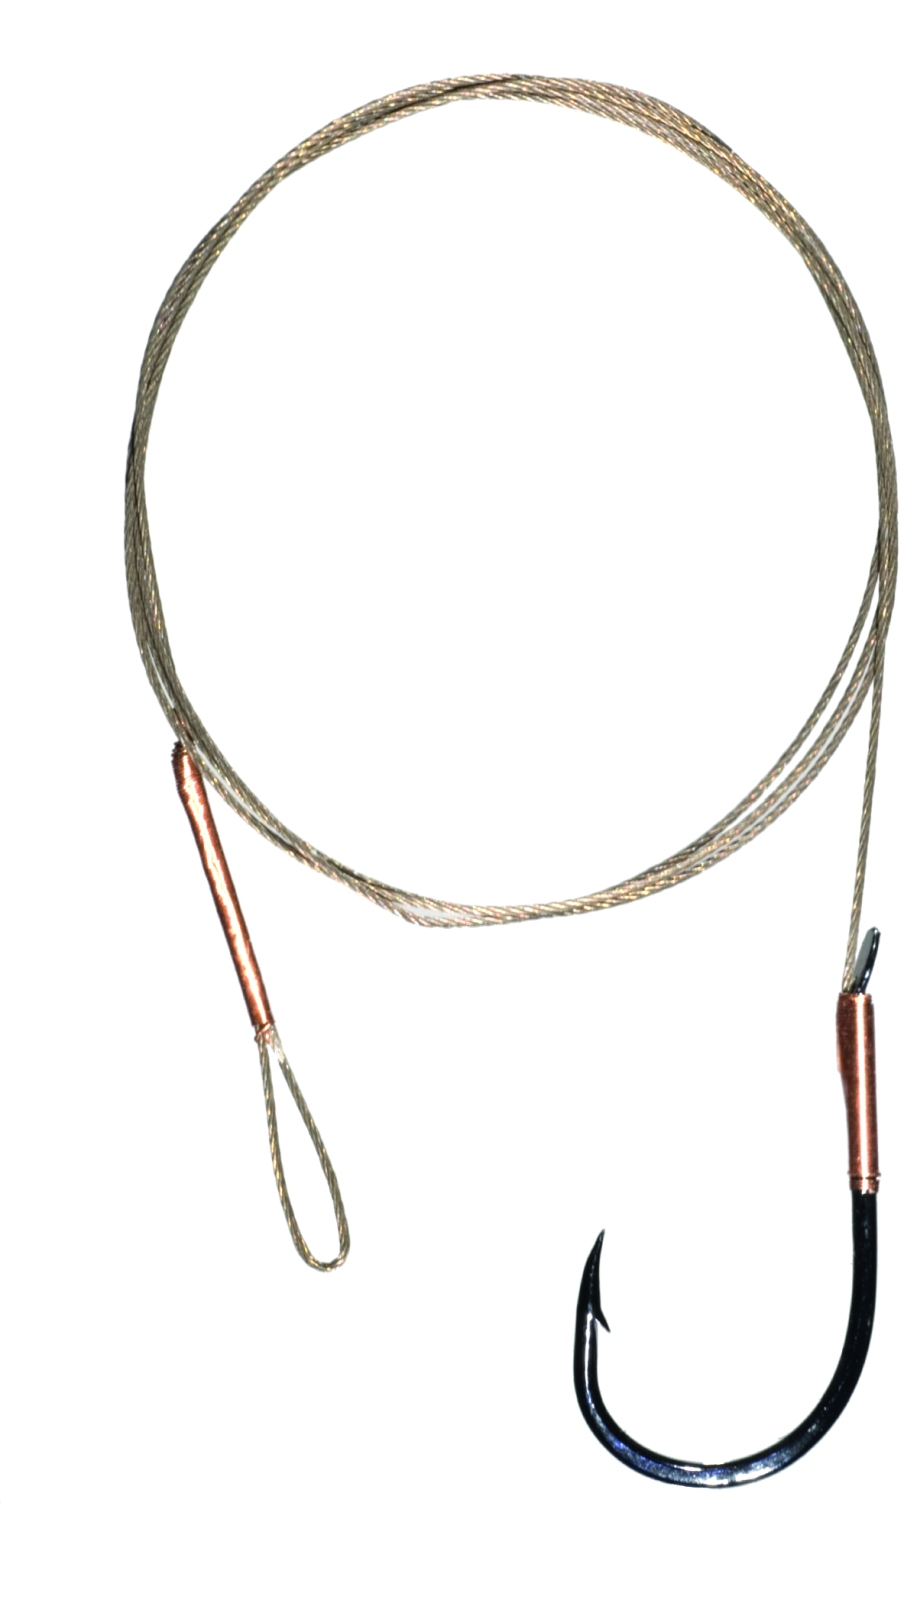 4151/6 single hook on steel - 2 pcs/pack